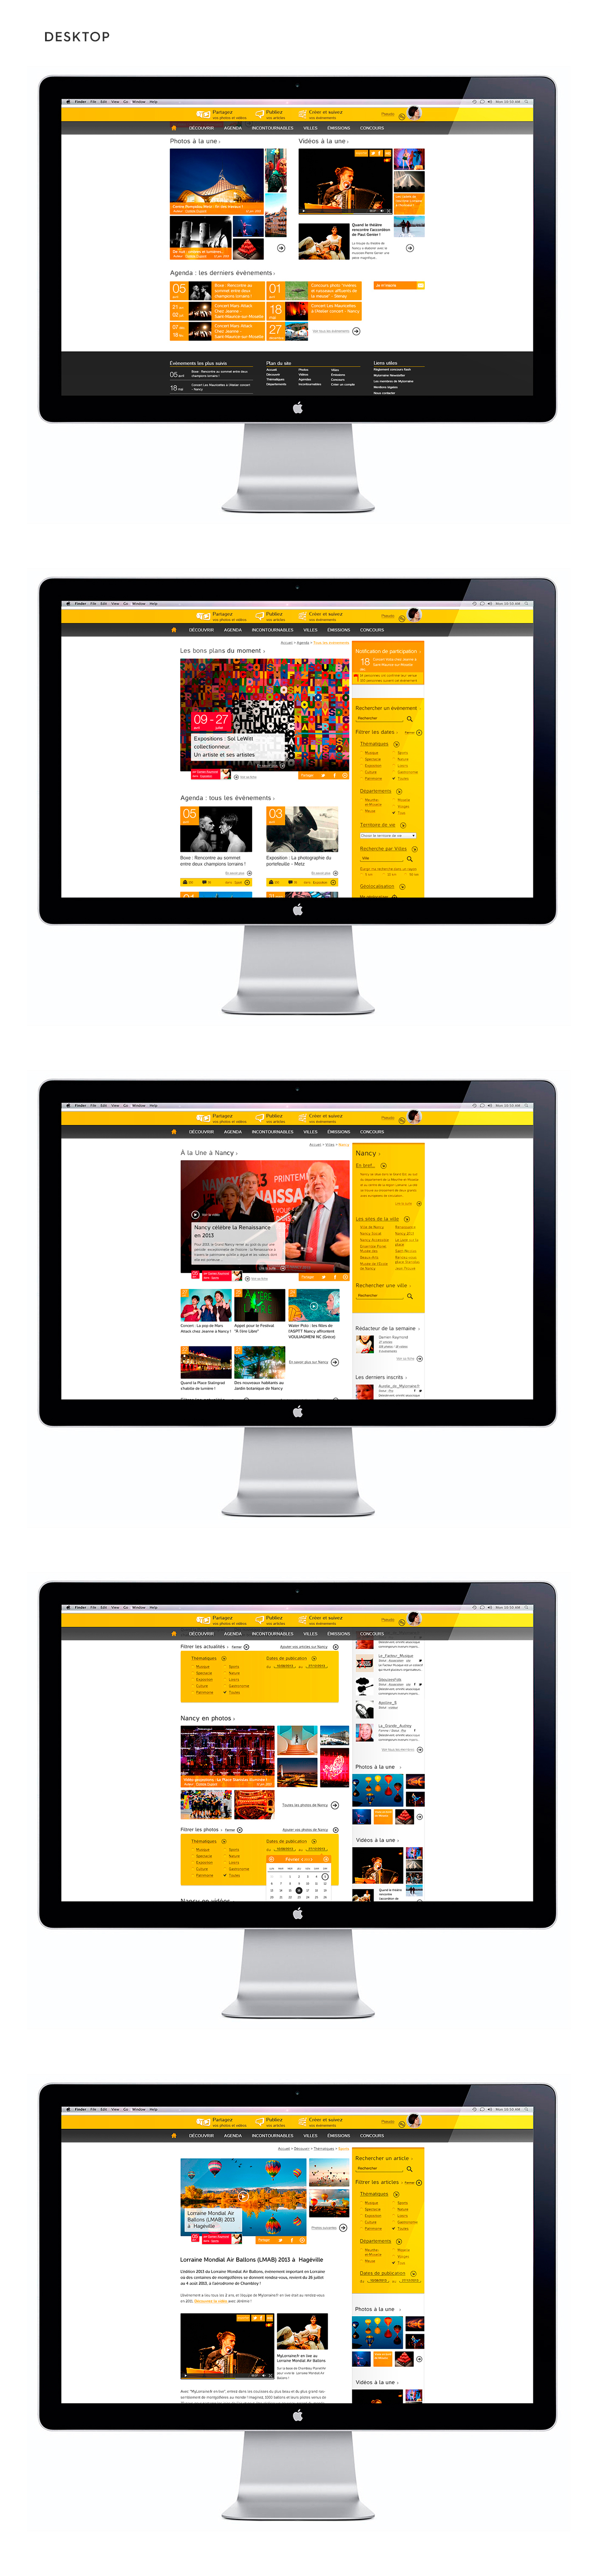 Webdesign UI ux Interface social website community website ergonomy interaction